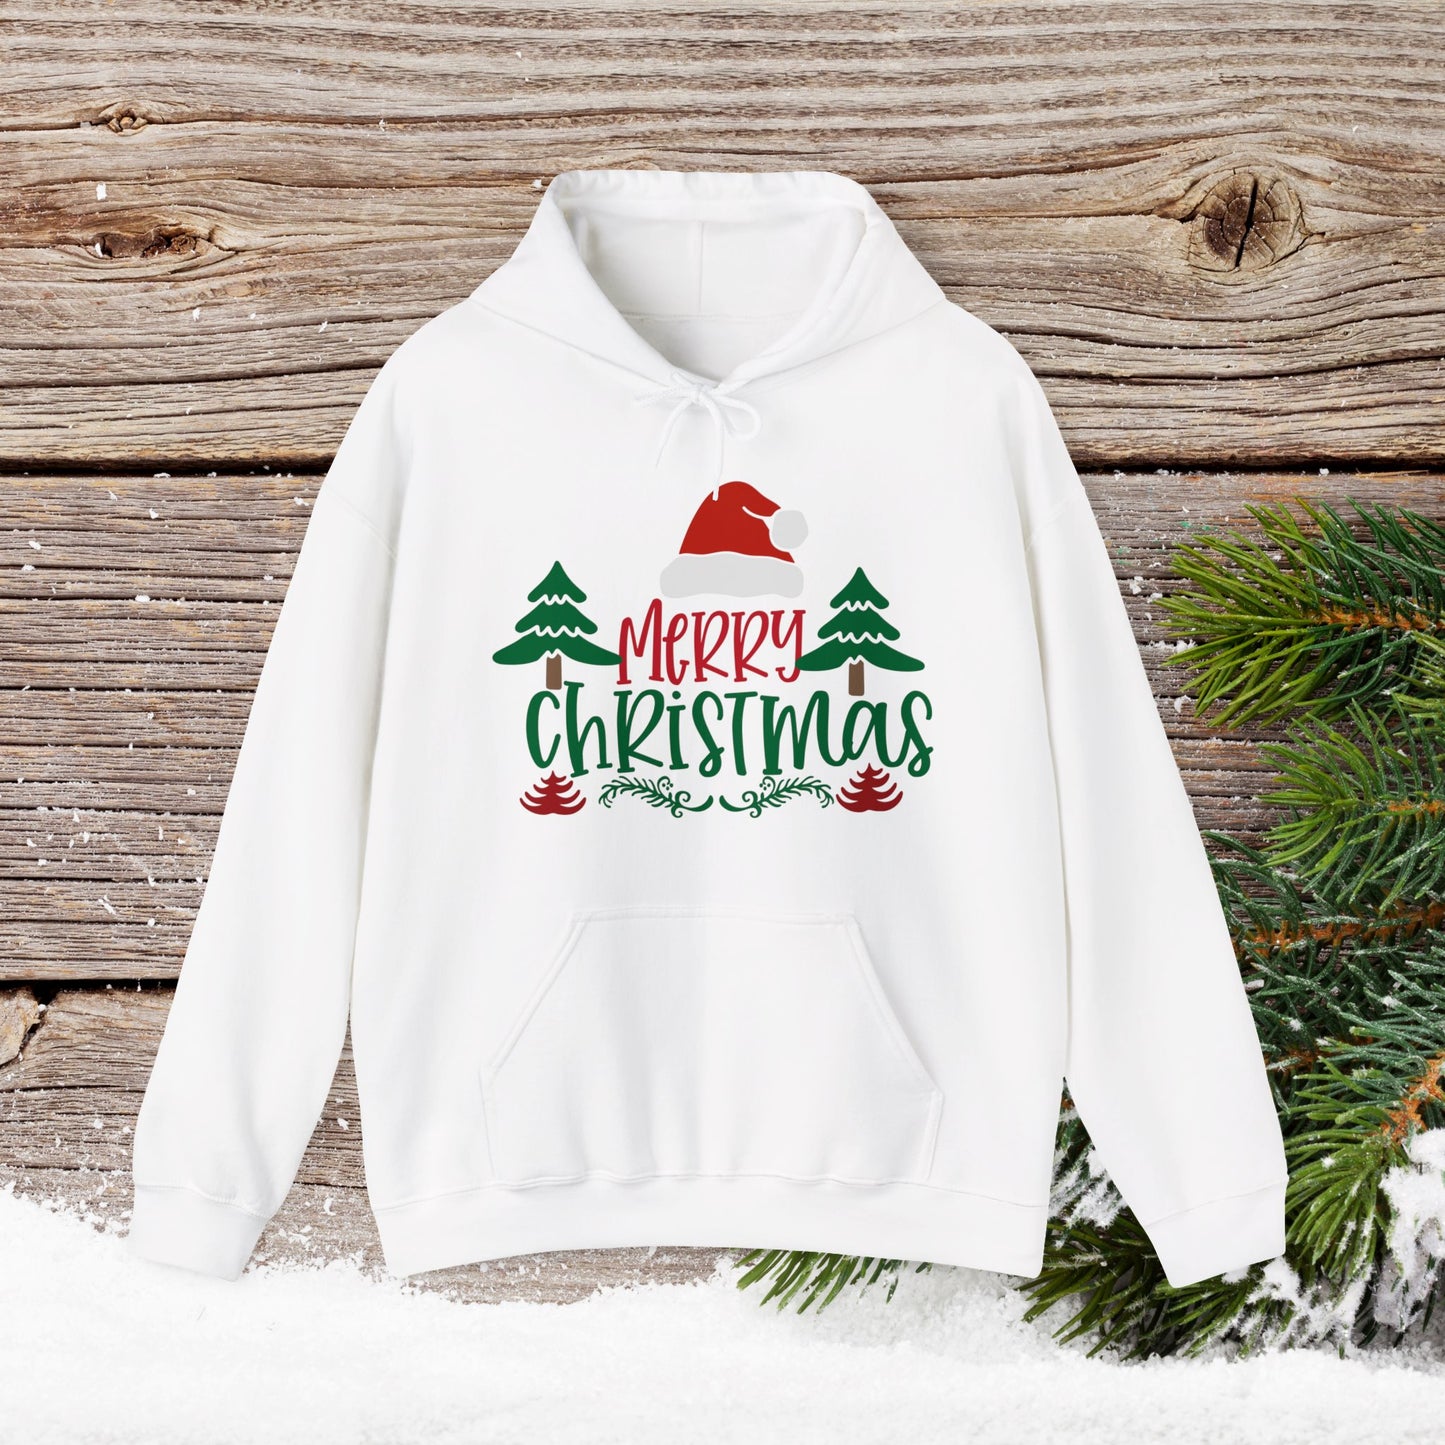 Christmas Hoodie - Merry Christmas - Cute Christmas Shirts - Youth and Adult Christmas Hooded Sweatshirt Hooded Sweatshirt Graphic Avenue White Adult Small 